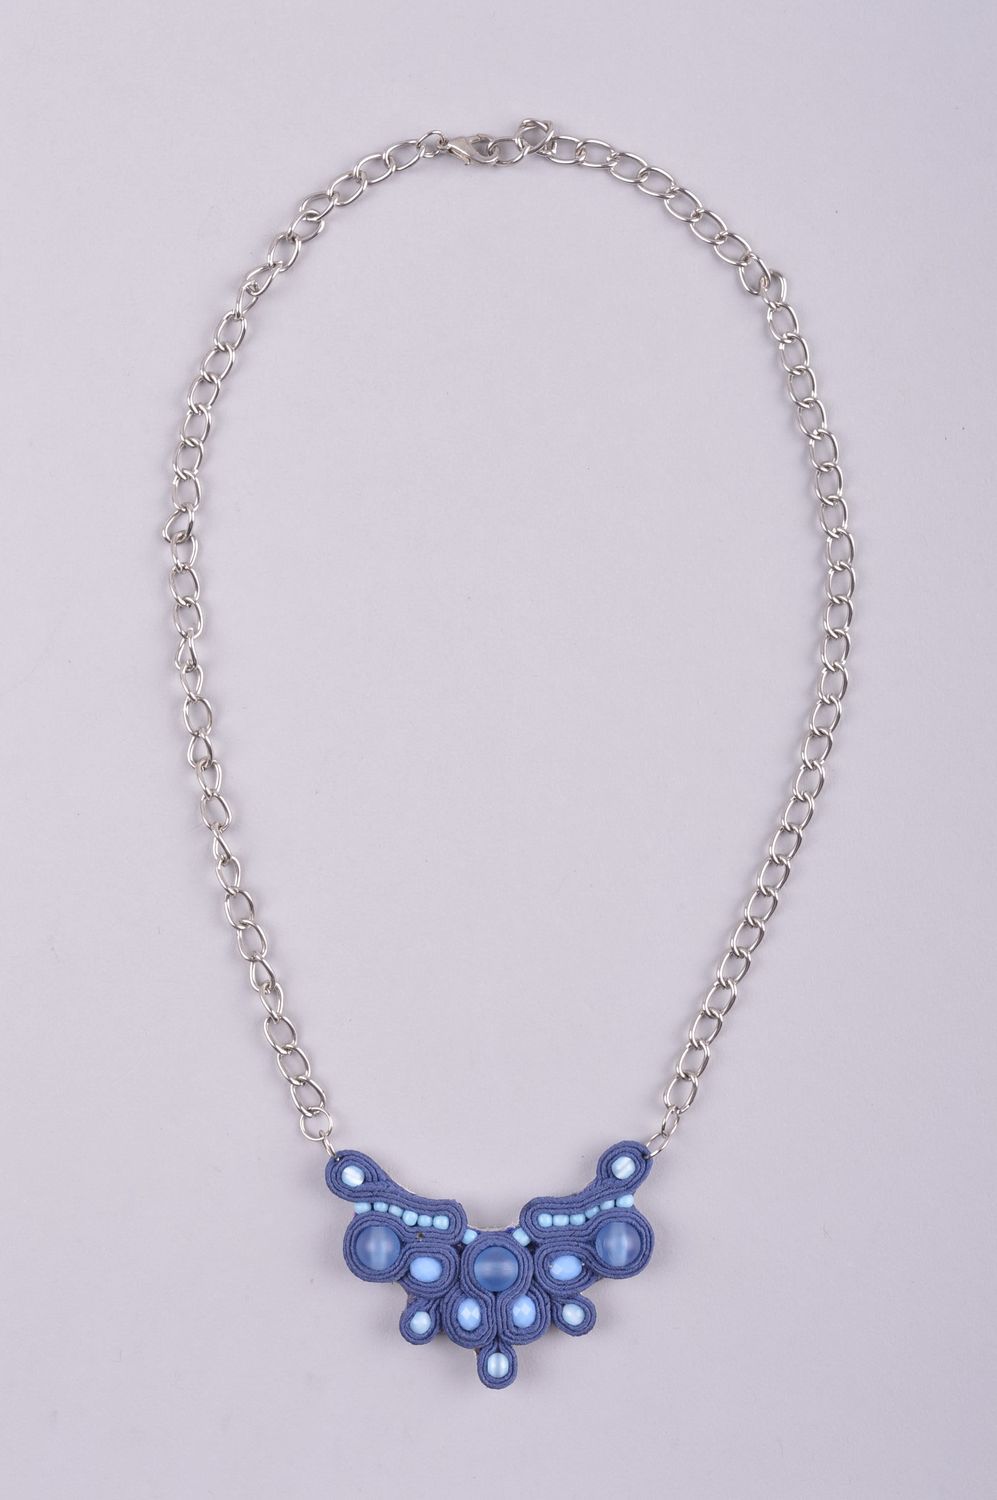 Stylish handmade textile necklace costume jewelry soutache jewelry designs photo 2